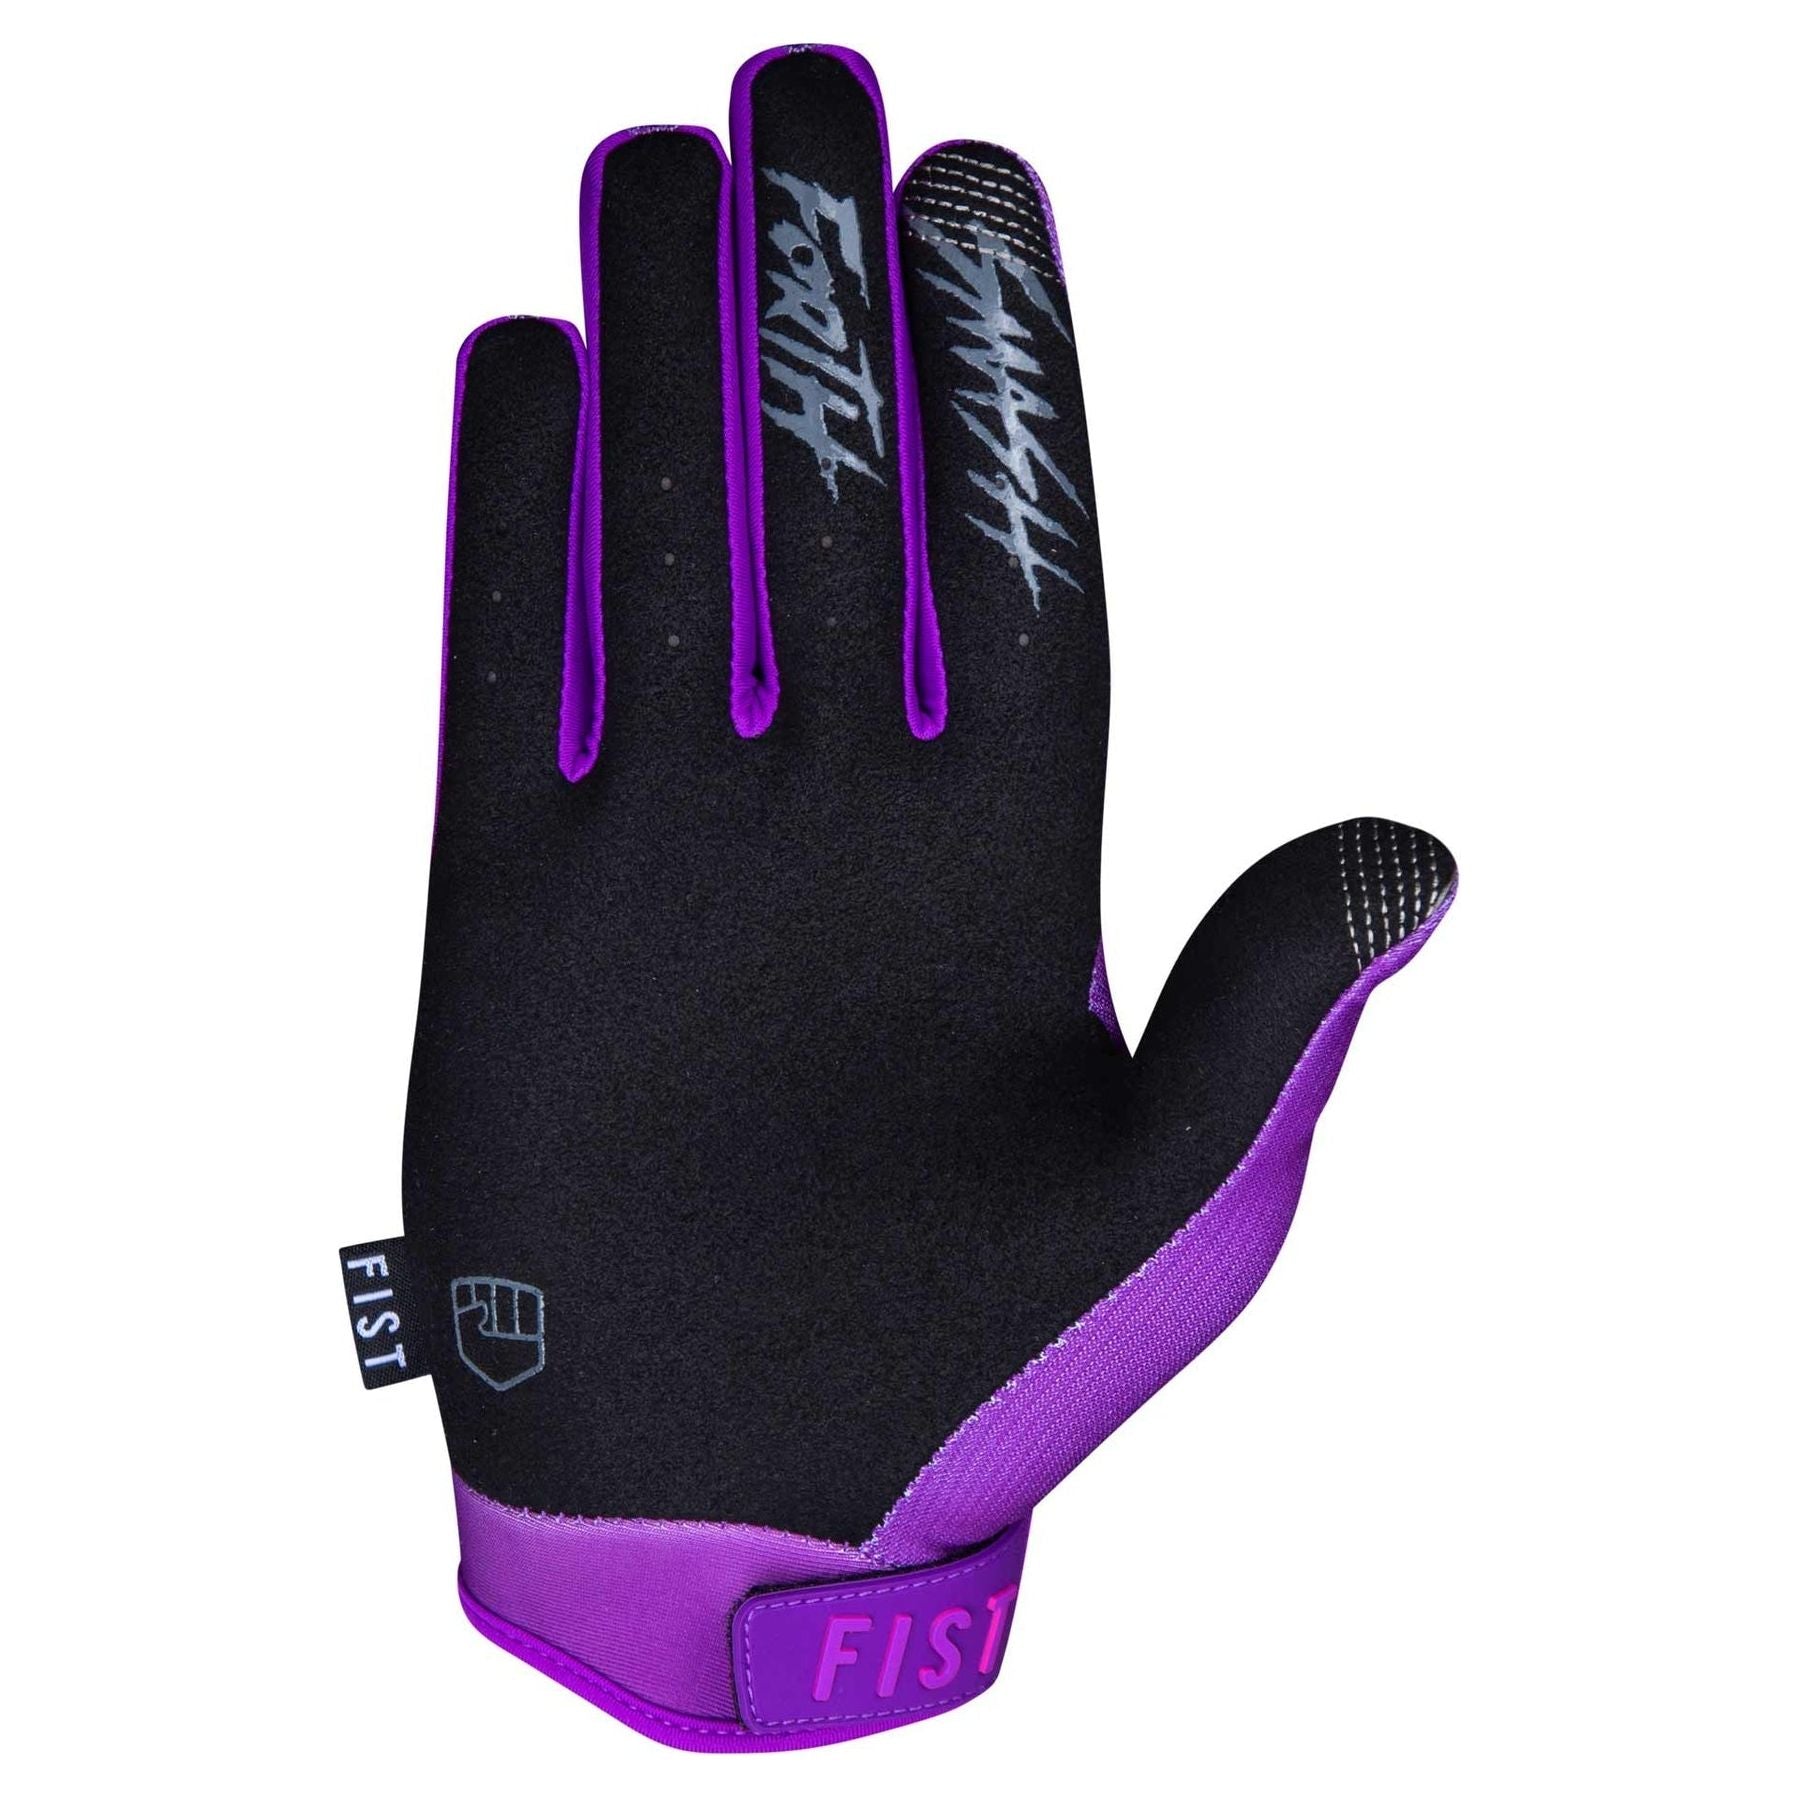 Fist Handwear Stocker Youth Strapped Glove - Youth M - Purple Stocker - Image 2